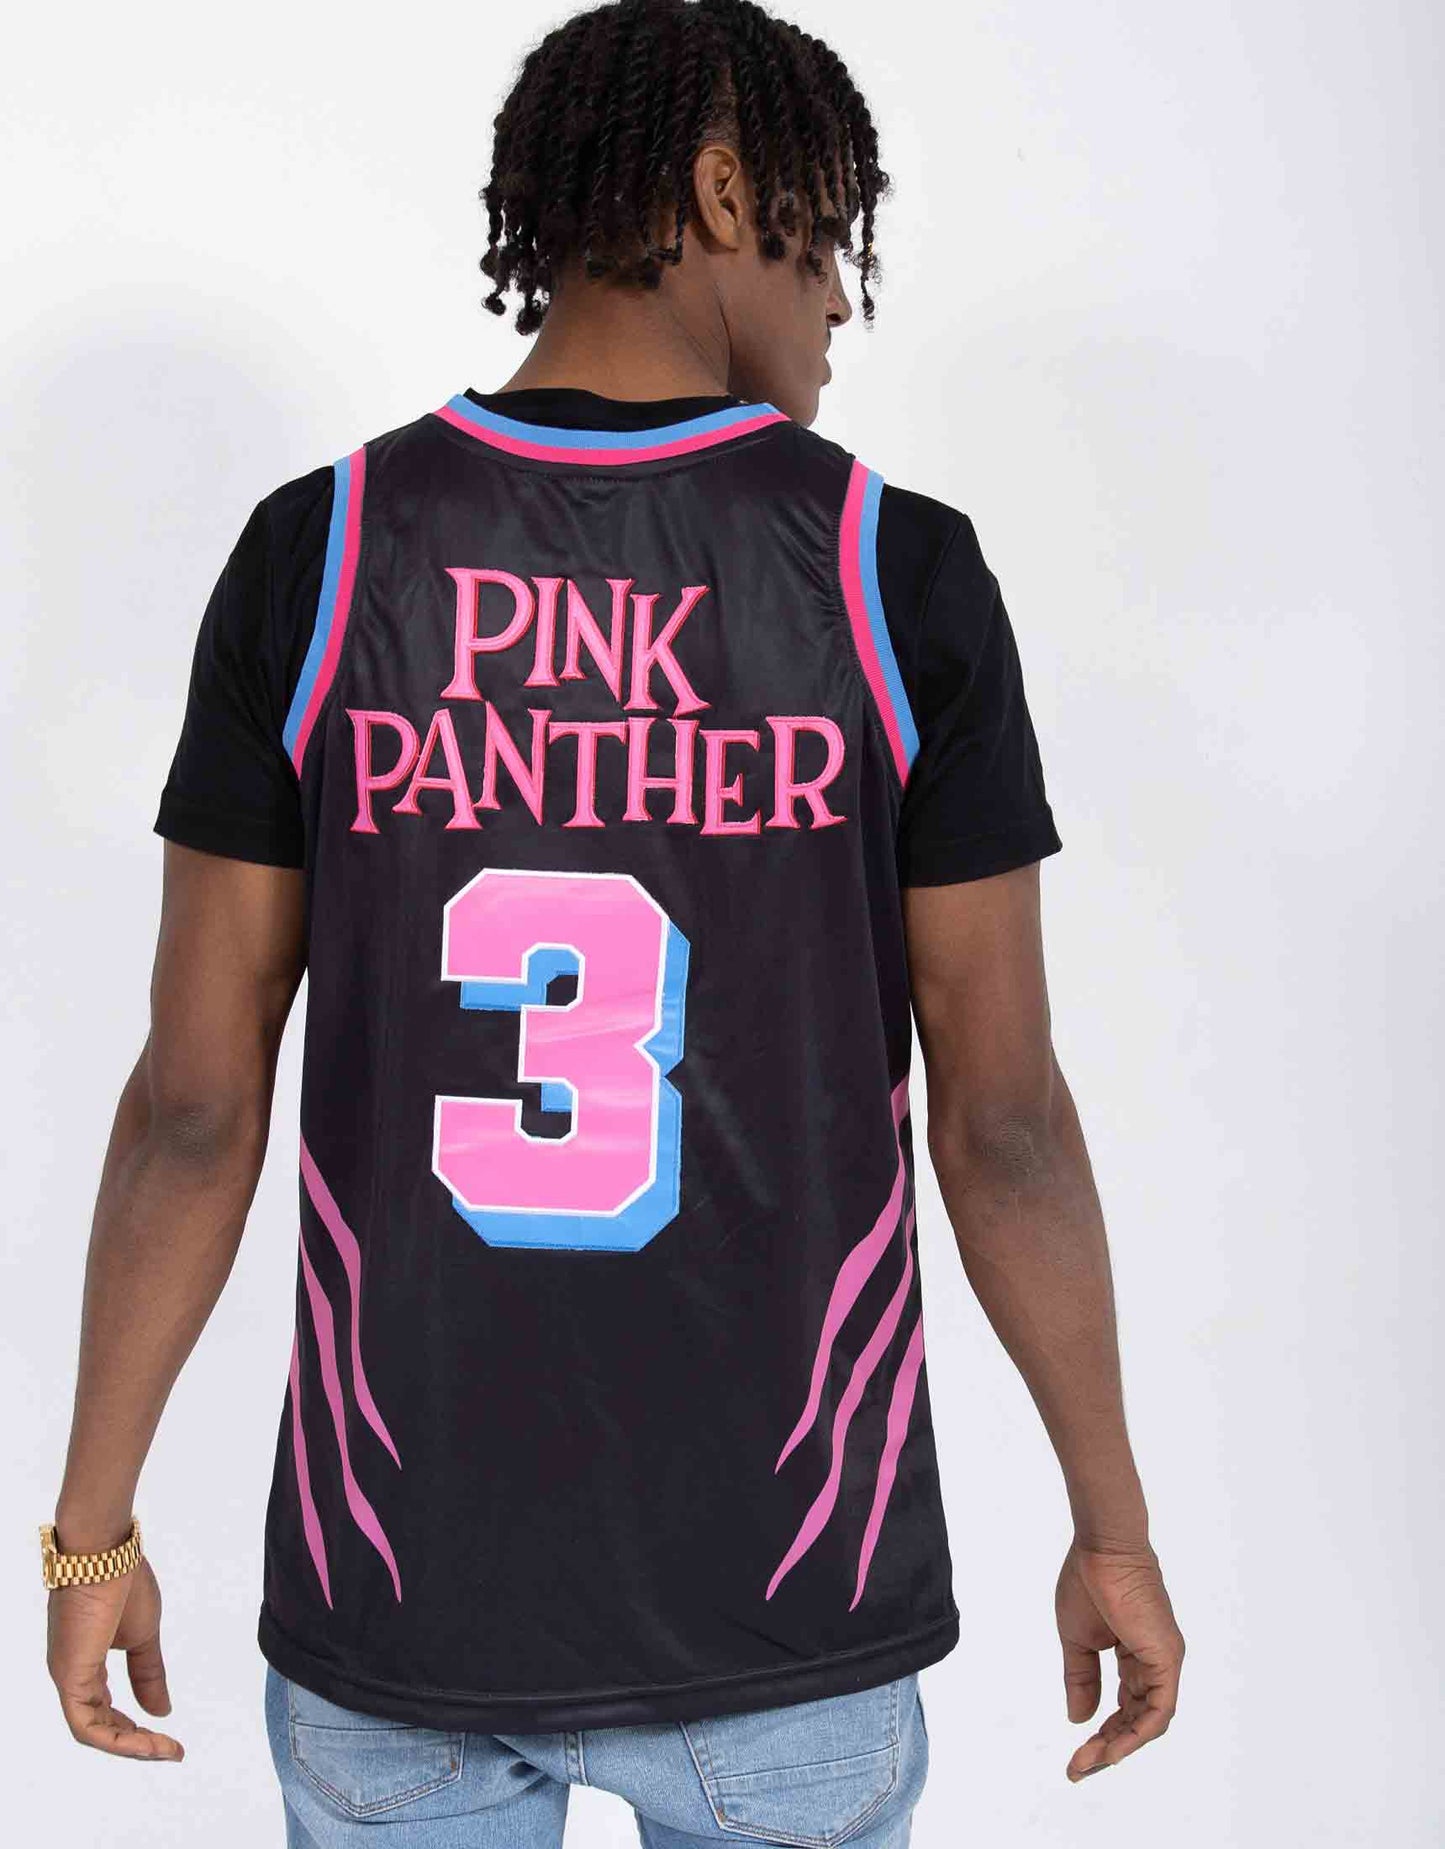 Miami X Pink Panther #3 Basketball Jersey